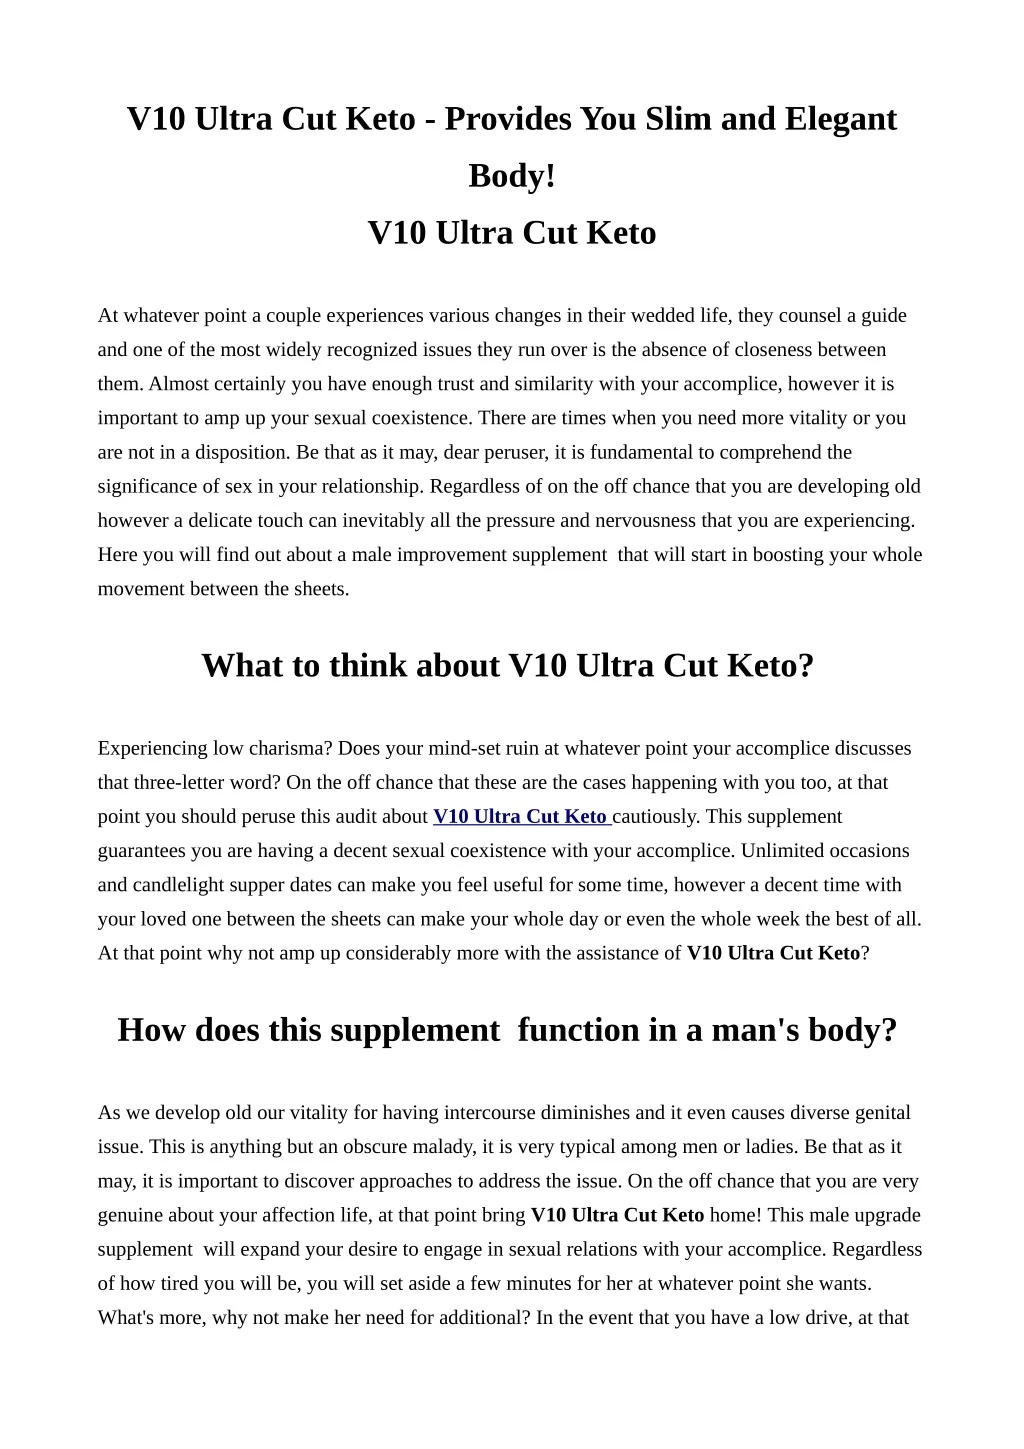 v10 ultra cut keto provides you slim and elegant